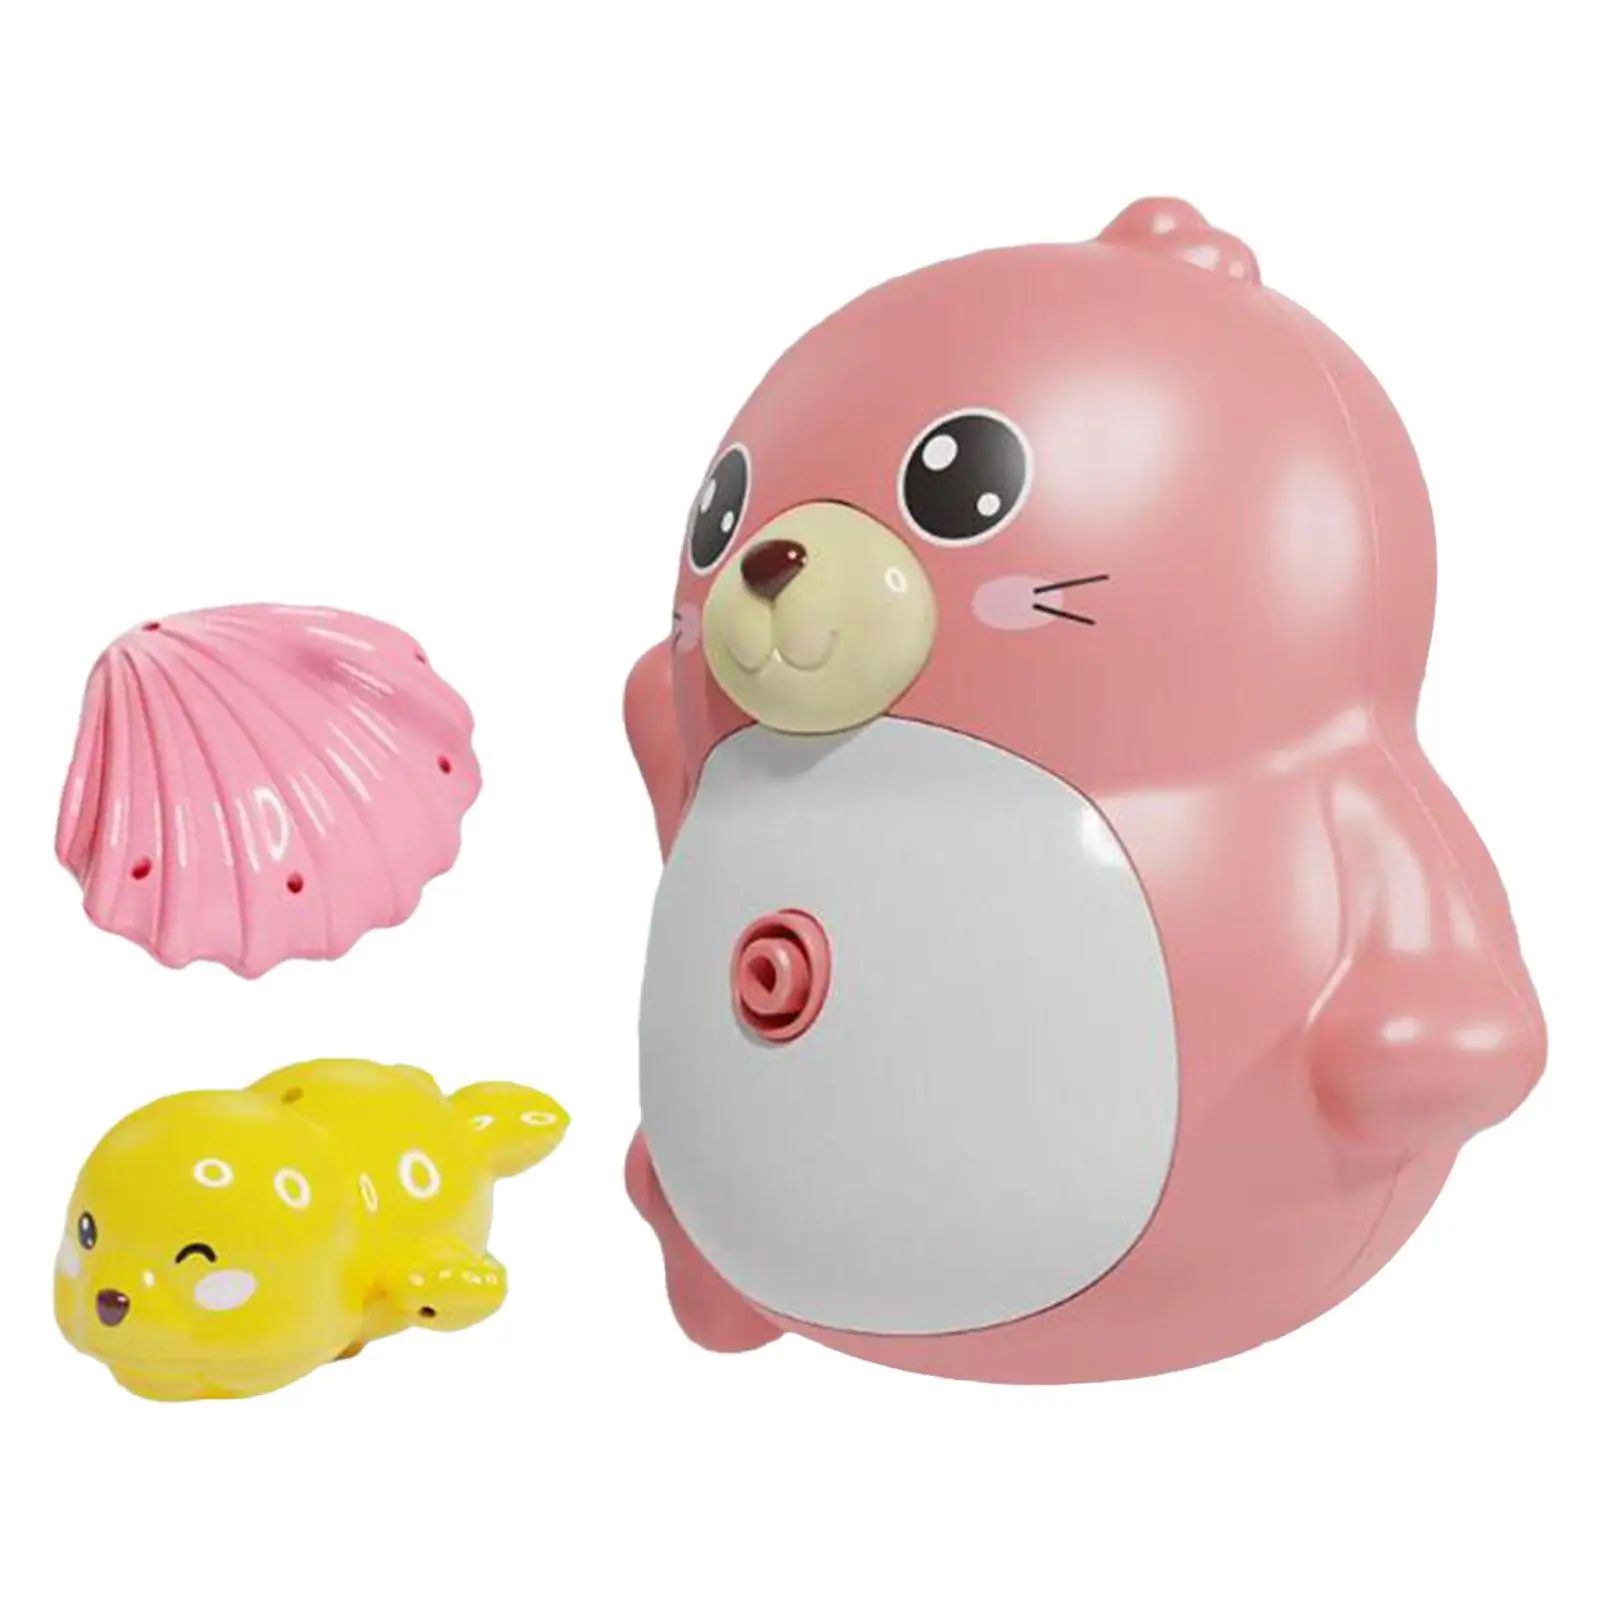 

3x Sea Lion Sprinkler Bath Toy Pool Bathroom Tub Baby Ocean Sea Animal Bathtub Toys for Girls Boys Kids Infants Toddlers